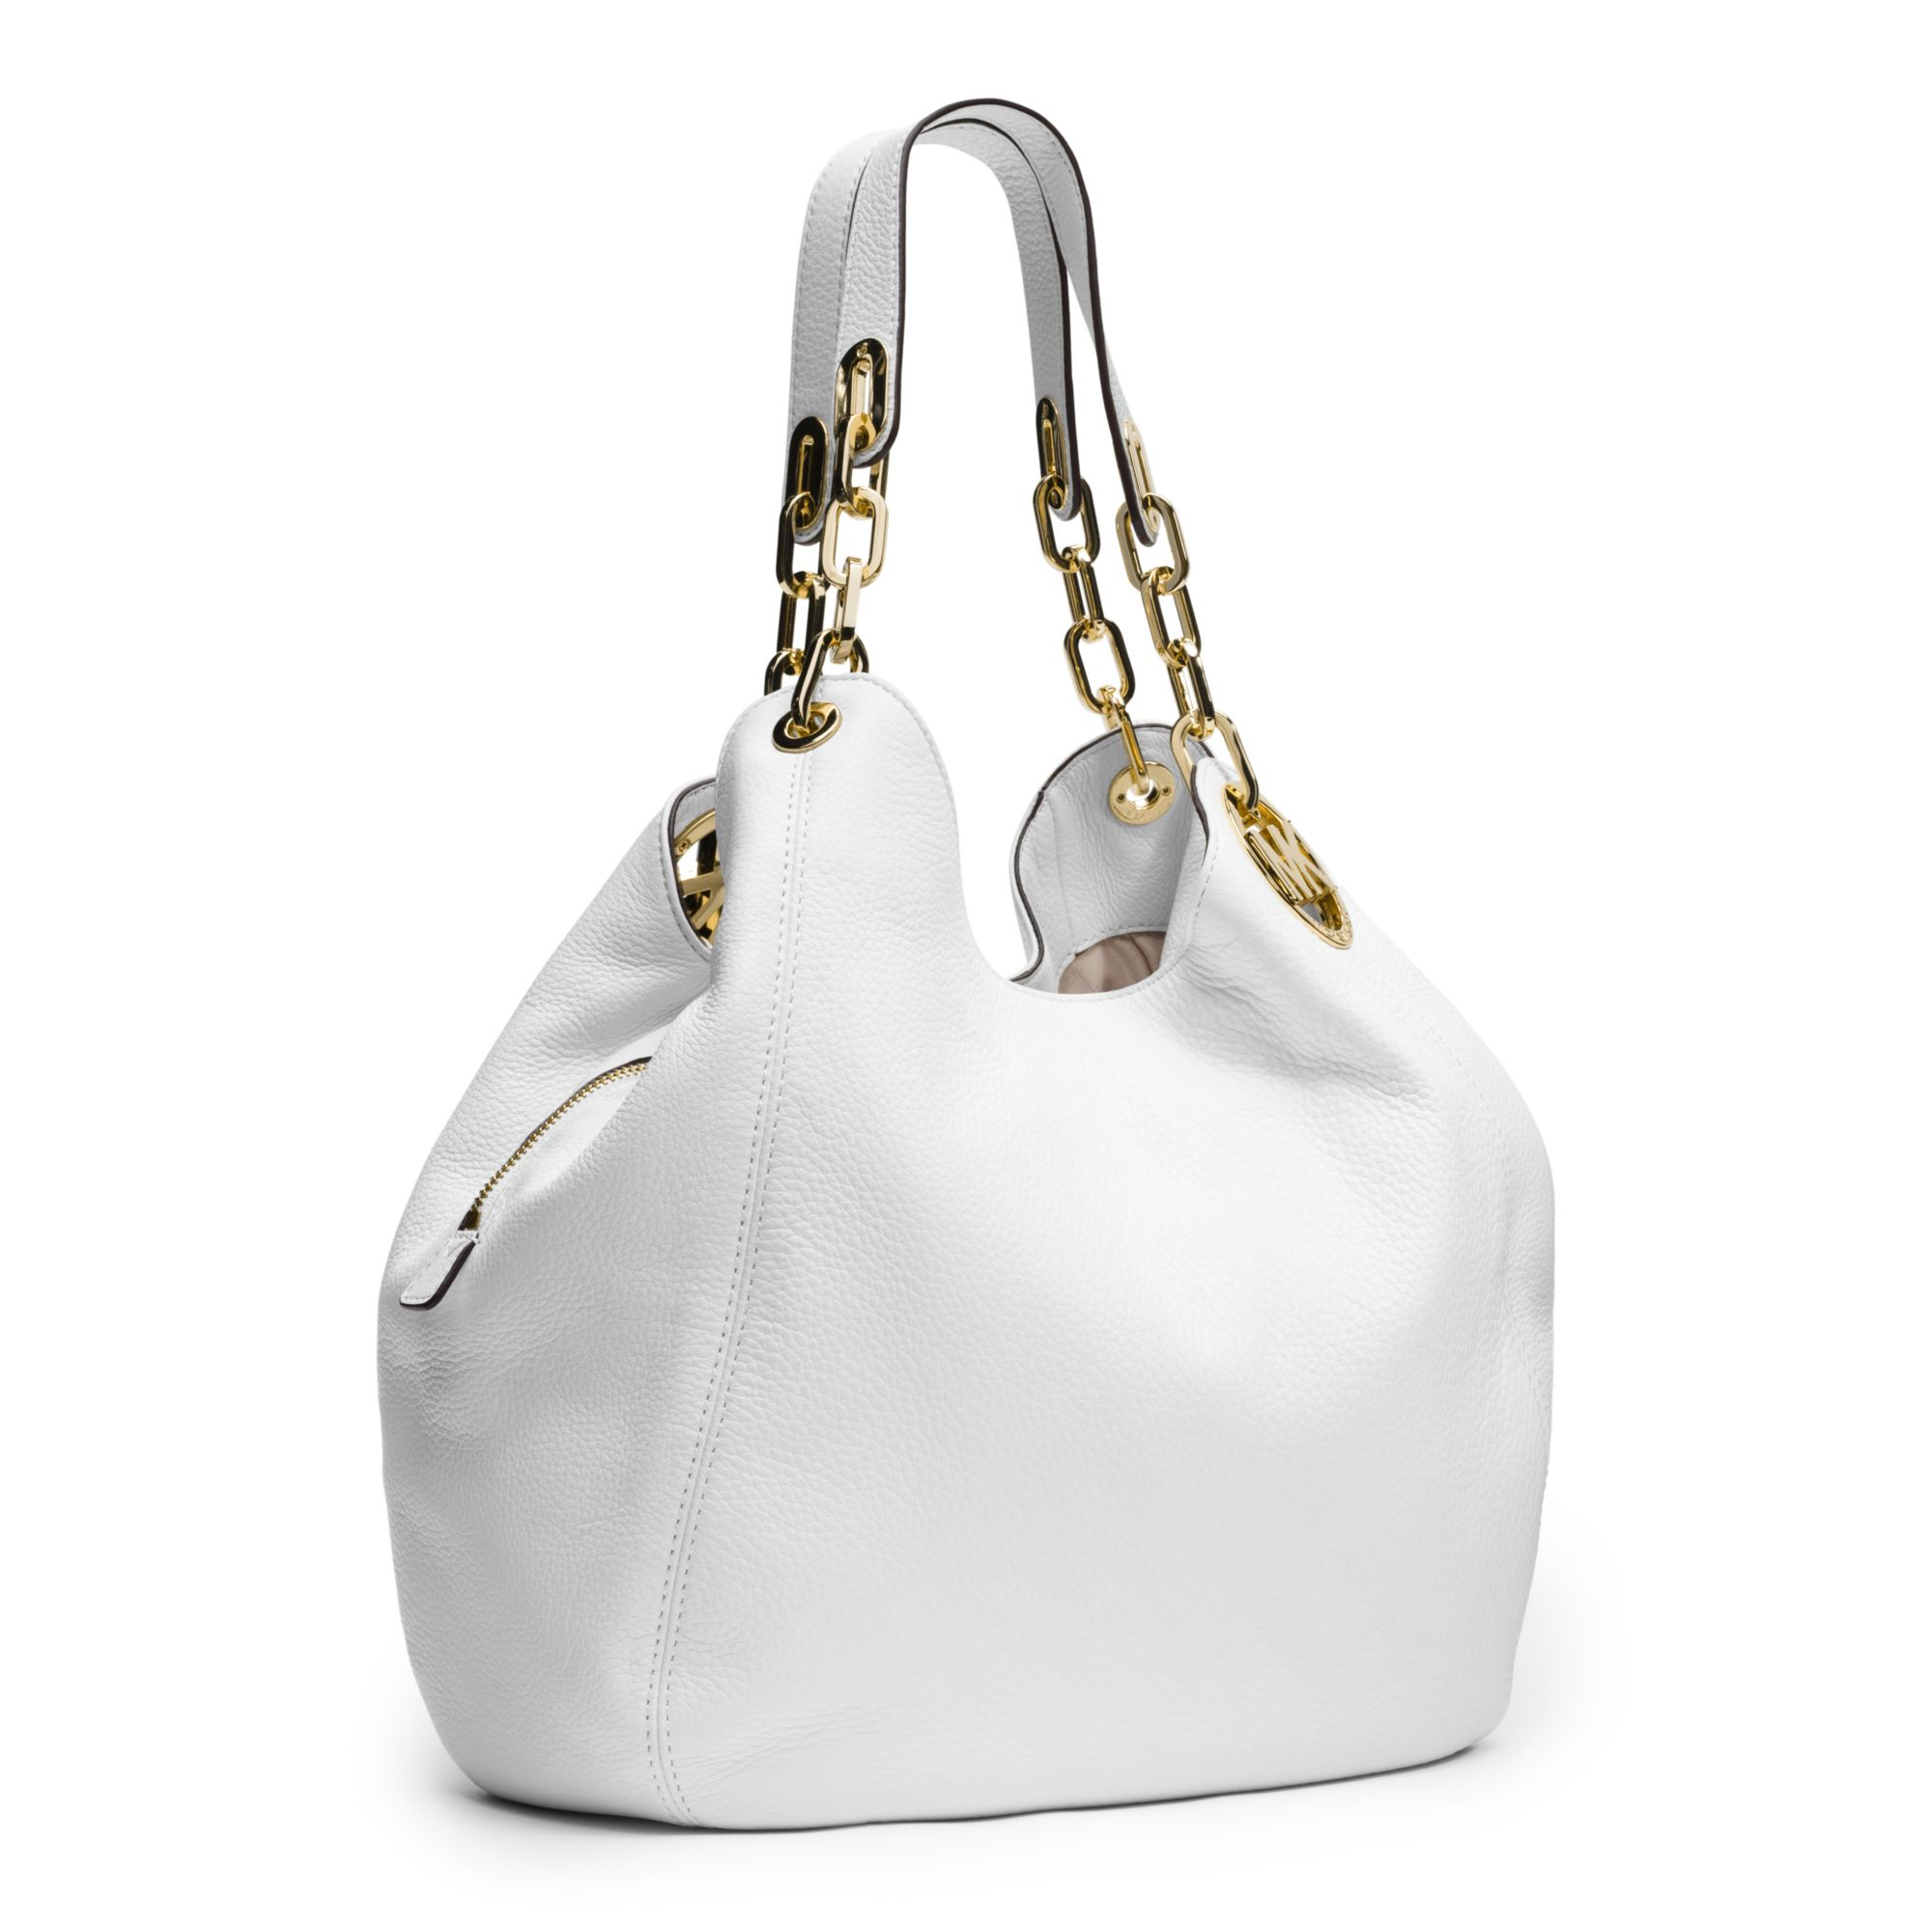 Michael kors Fulton Large Leather Shoulder Bag in White (OPTIC WHITE